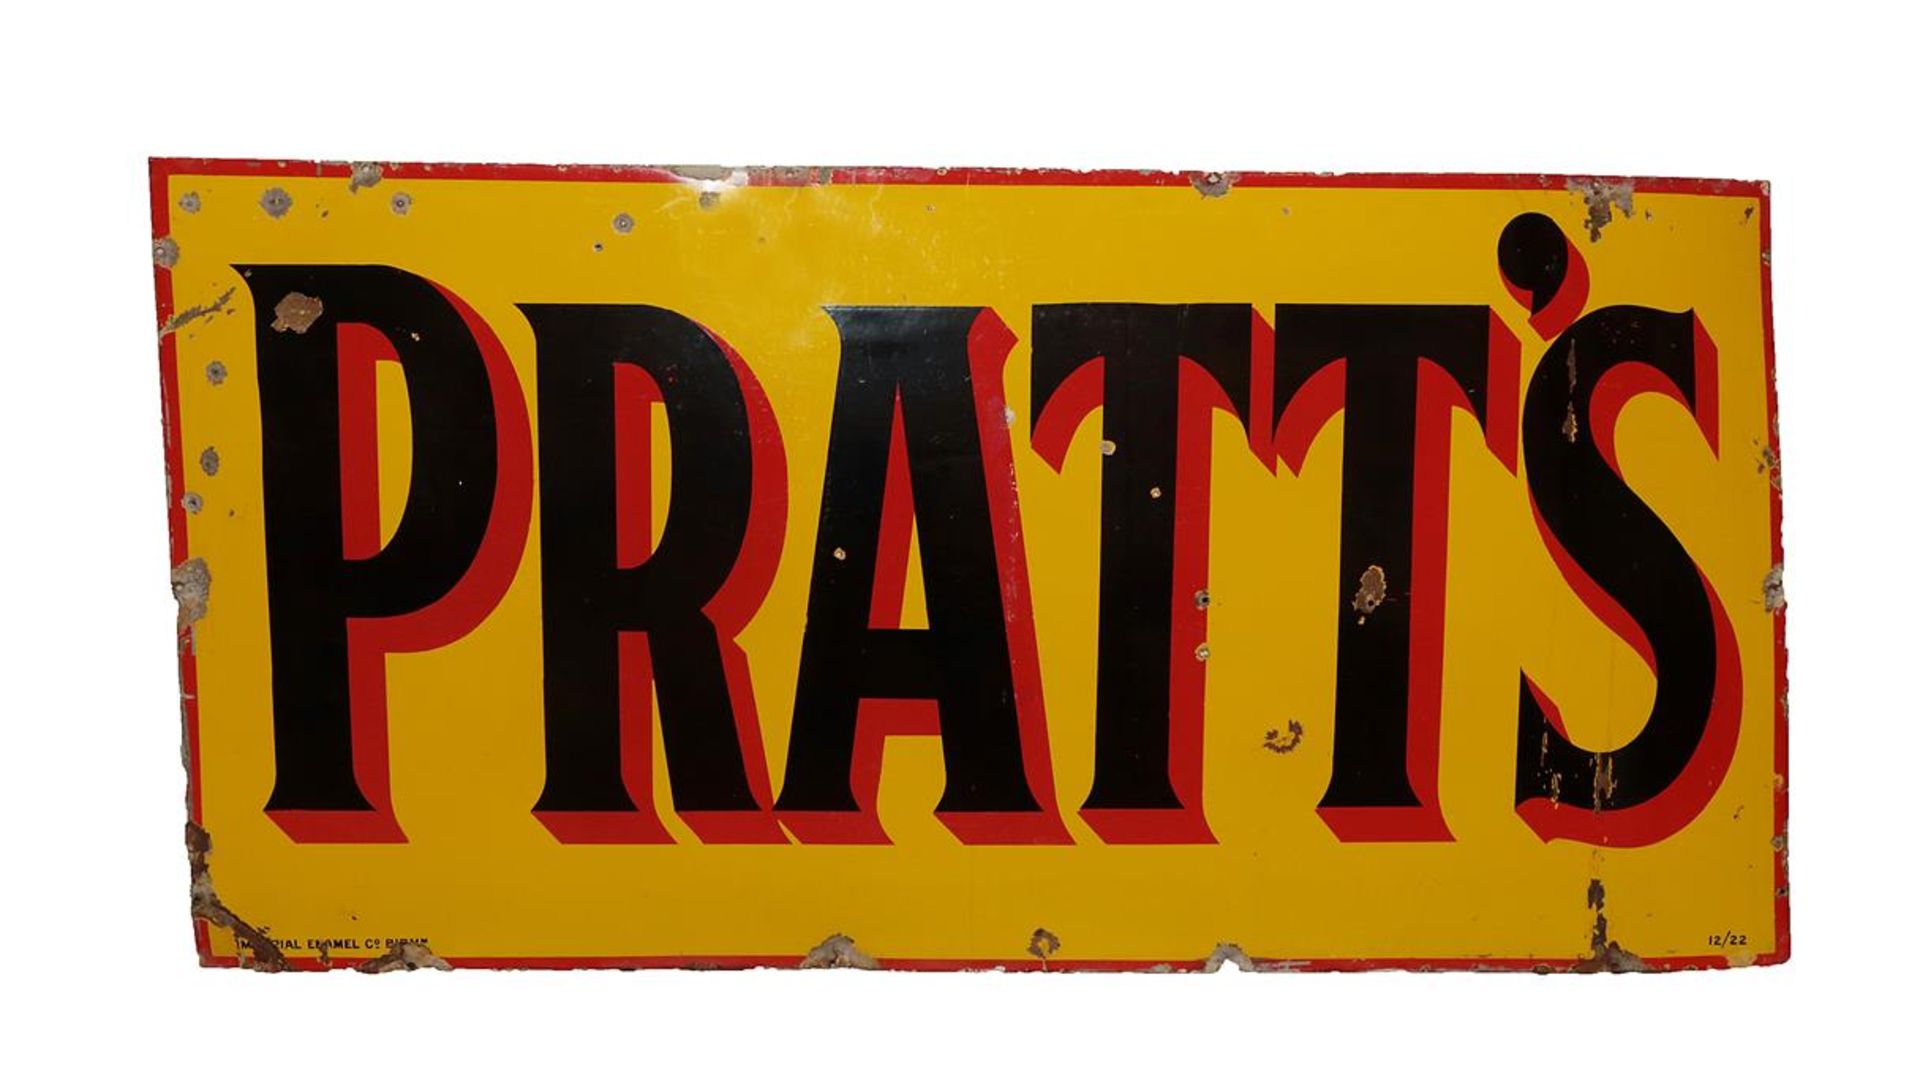 Pratt's: A Single-Sided Enamel Advertising Sign, by the Imperial Enamel Company, Birmingham,